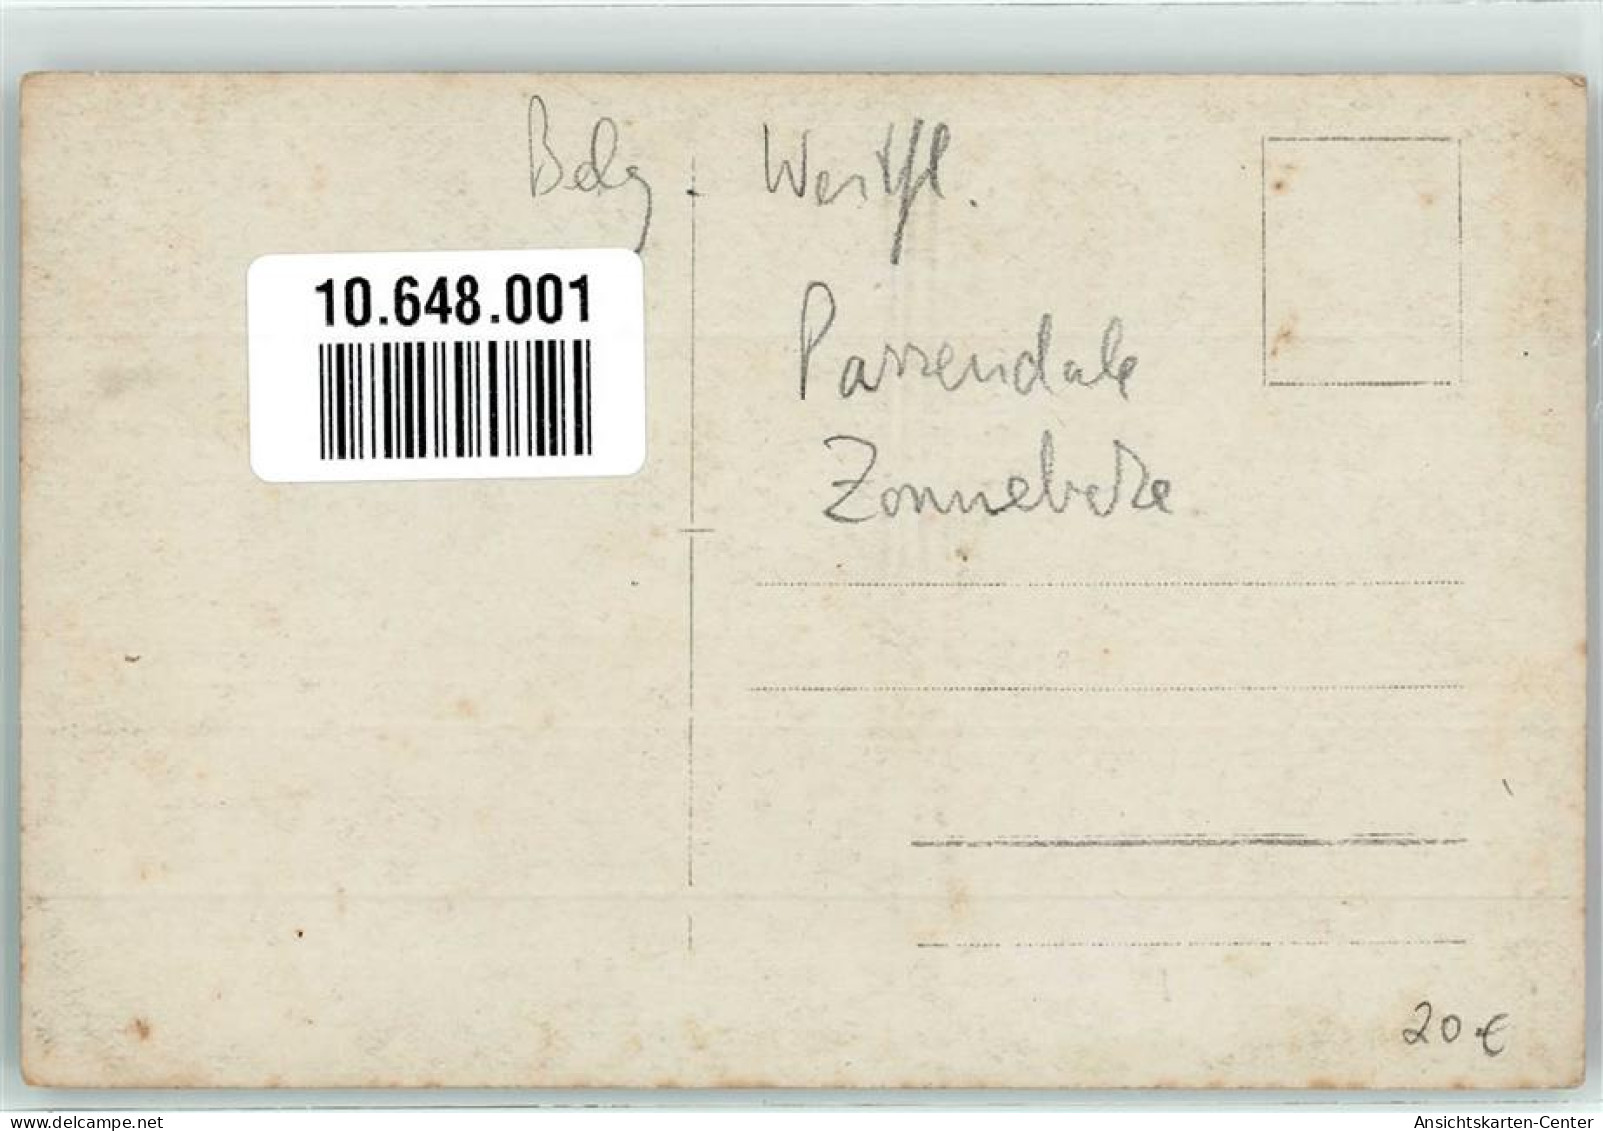 10648001 - Paschendaele - Zonnebeke